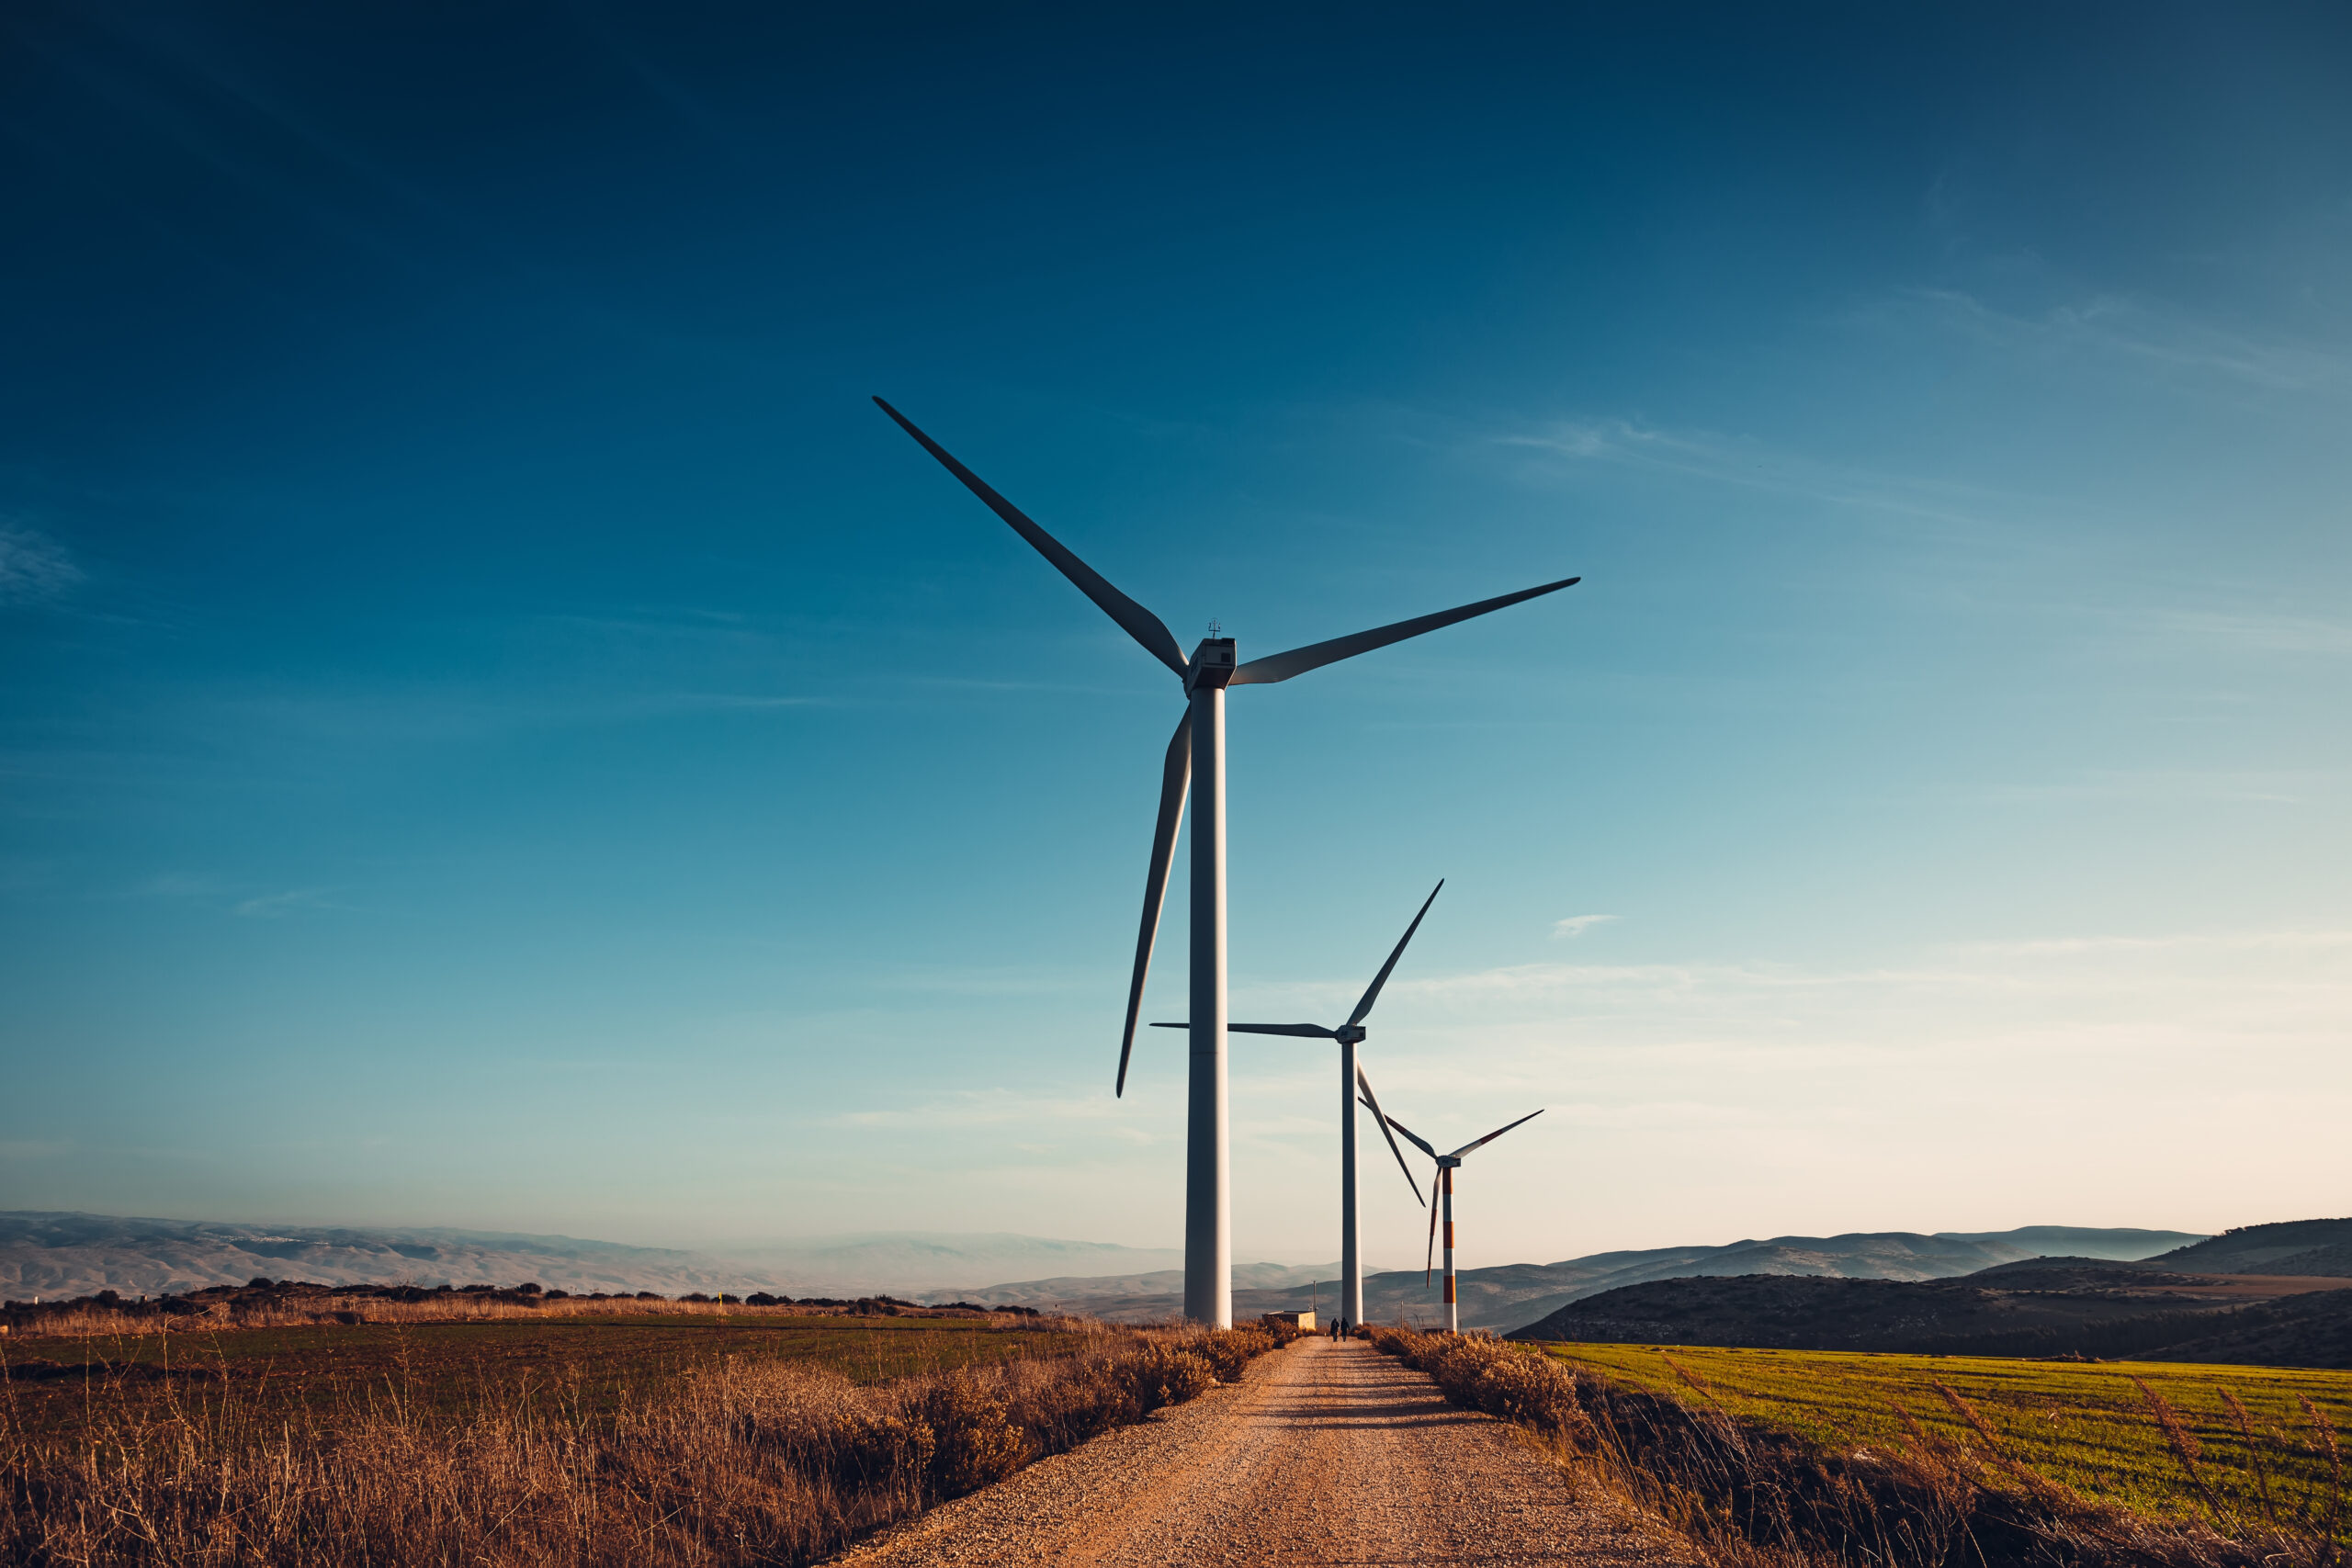 Energy Reform Brings Winds of Change